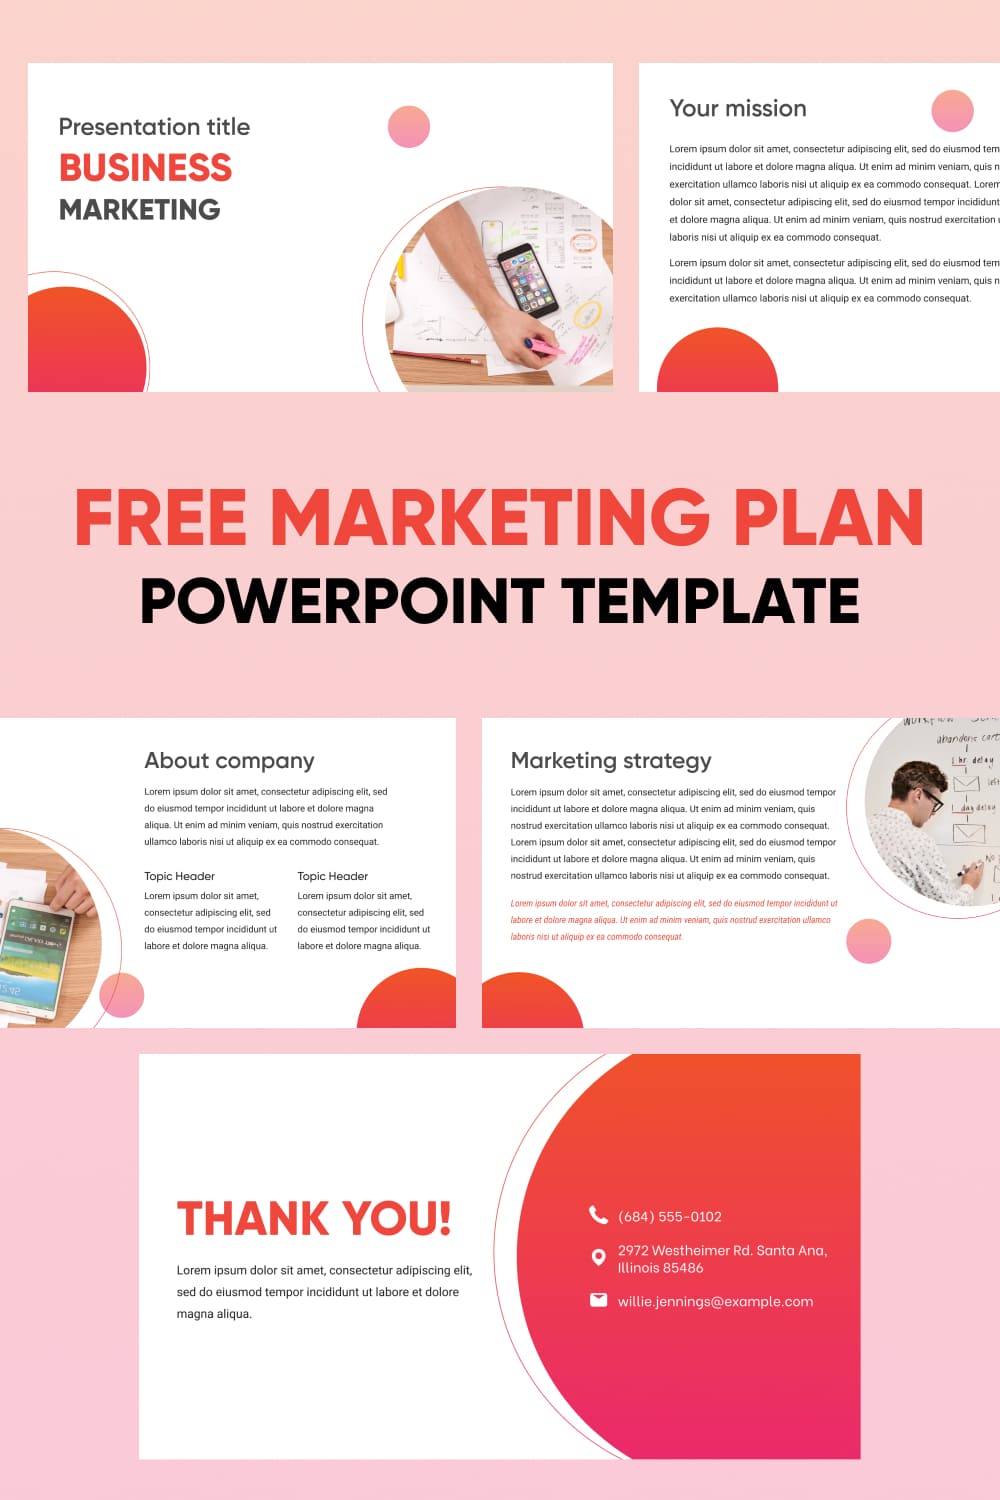 Free Marketing Plan Powerpoint Template Pinterest.